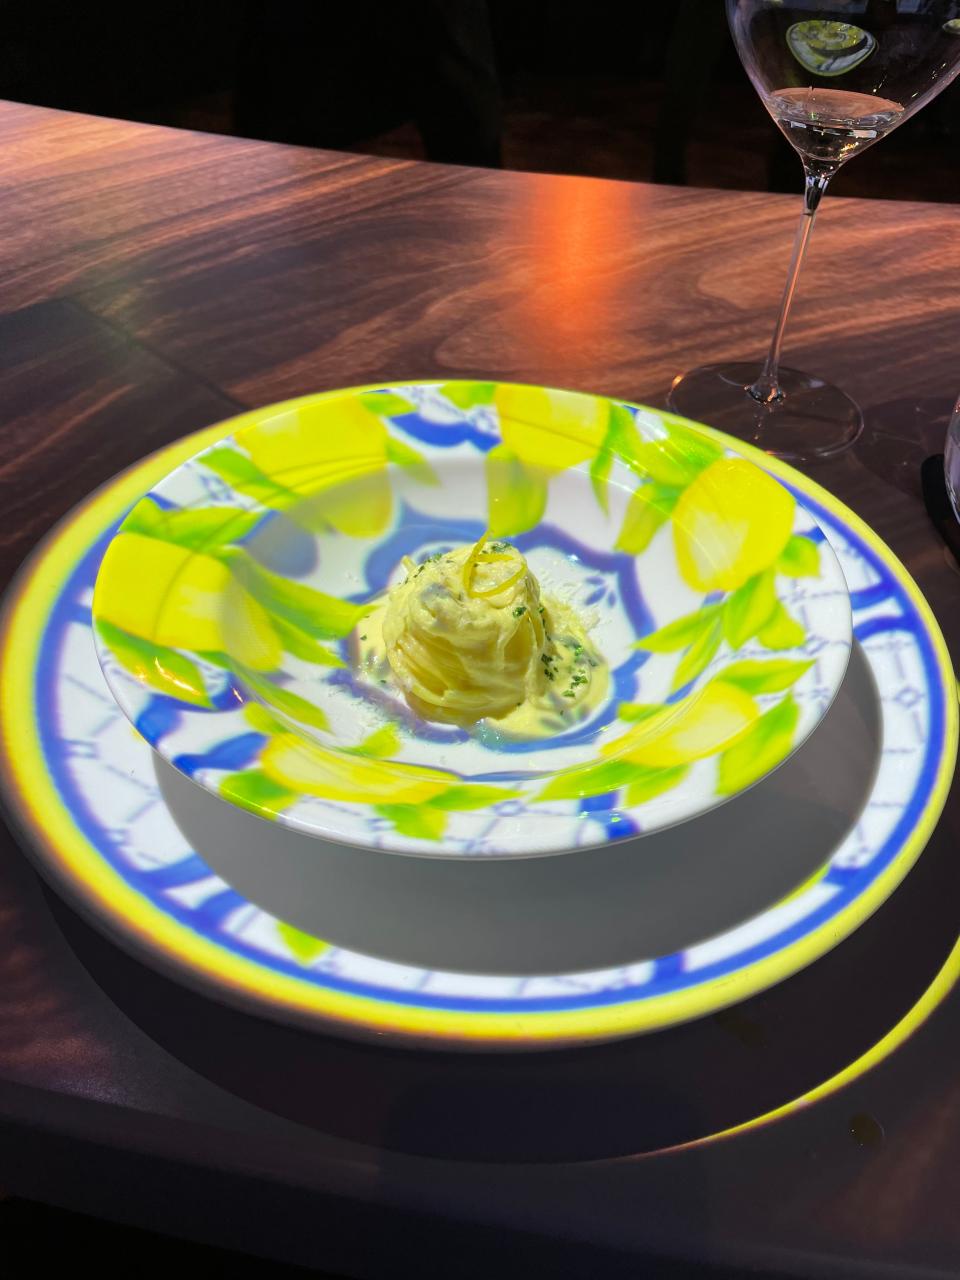 The menu included a lemon pasta dish.